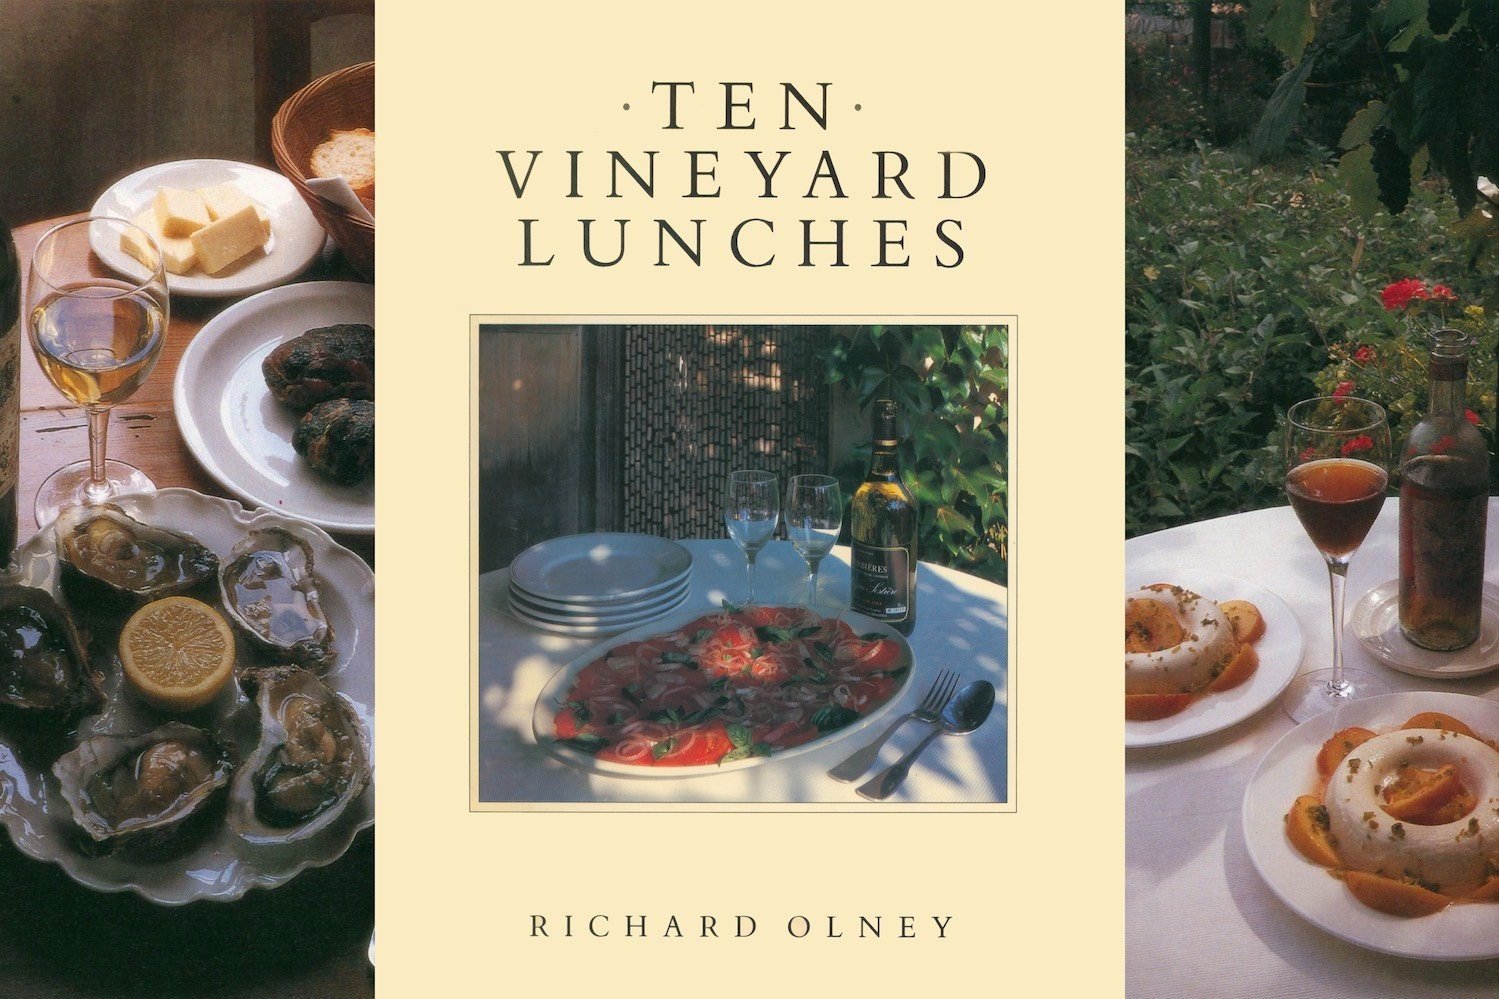 Ten Vineyard Lunches: Richard Olney’s wine wisdom